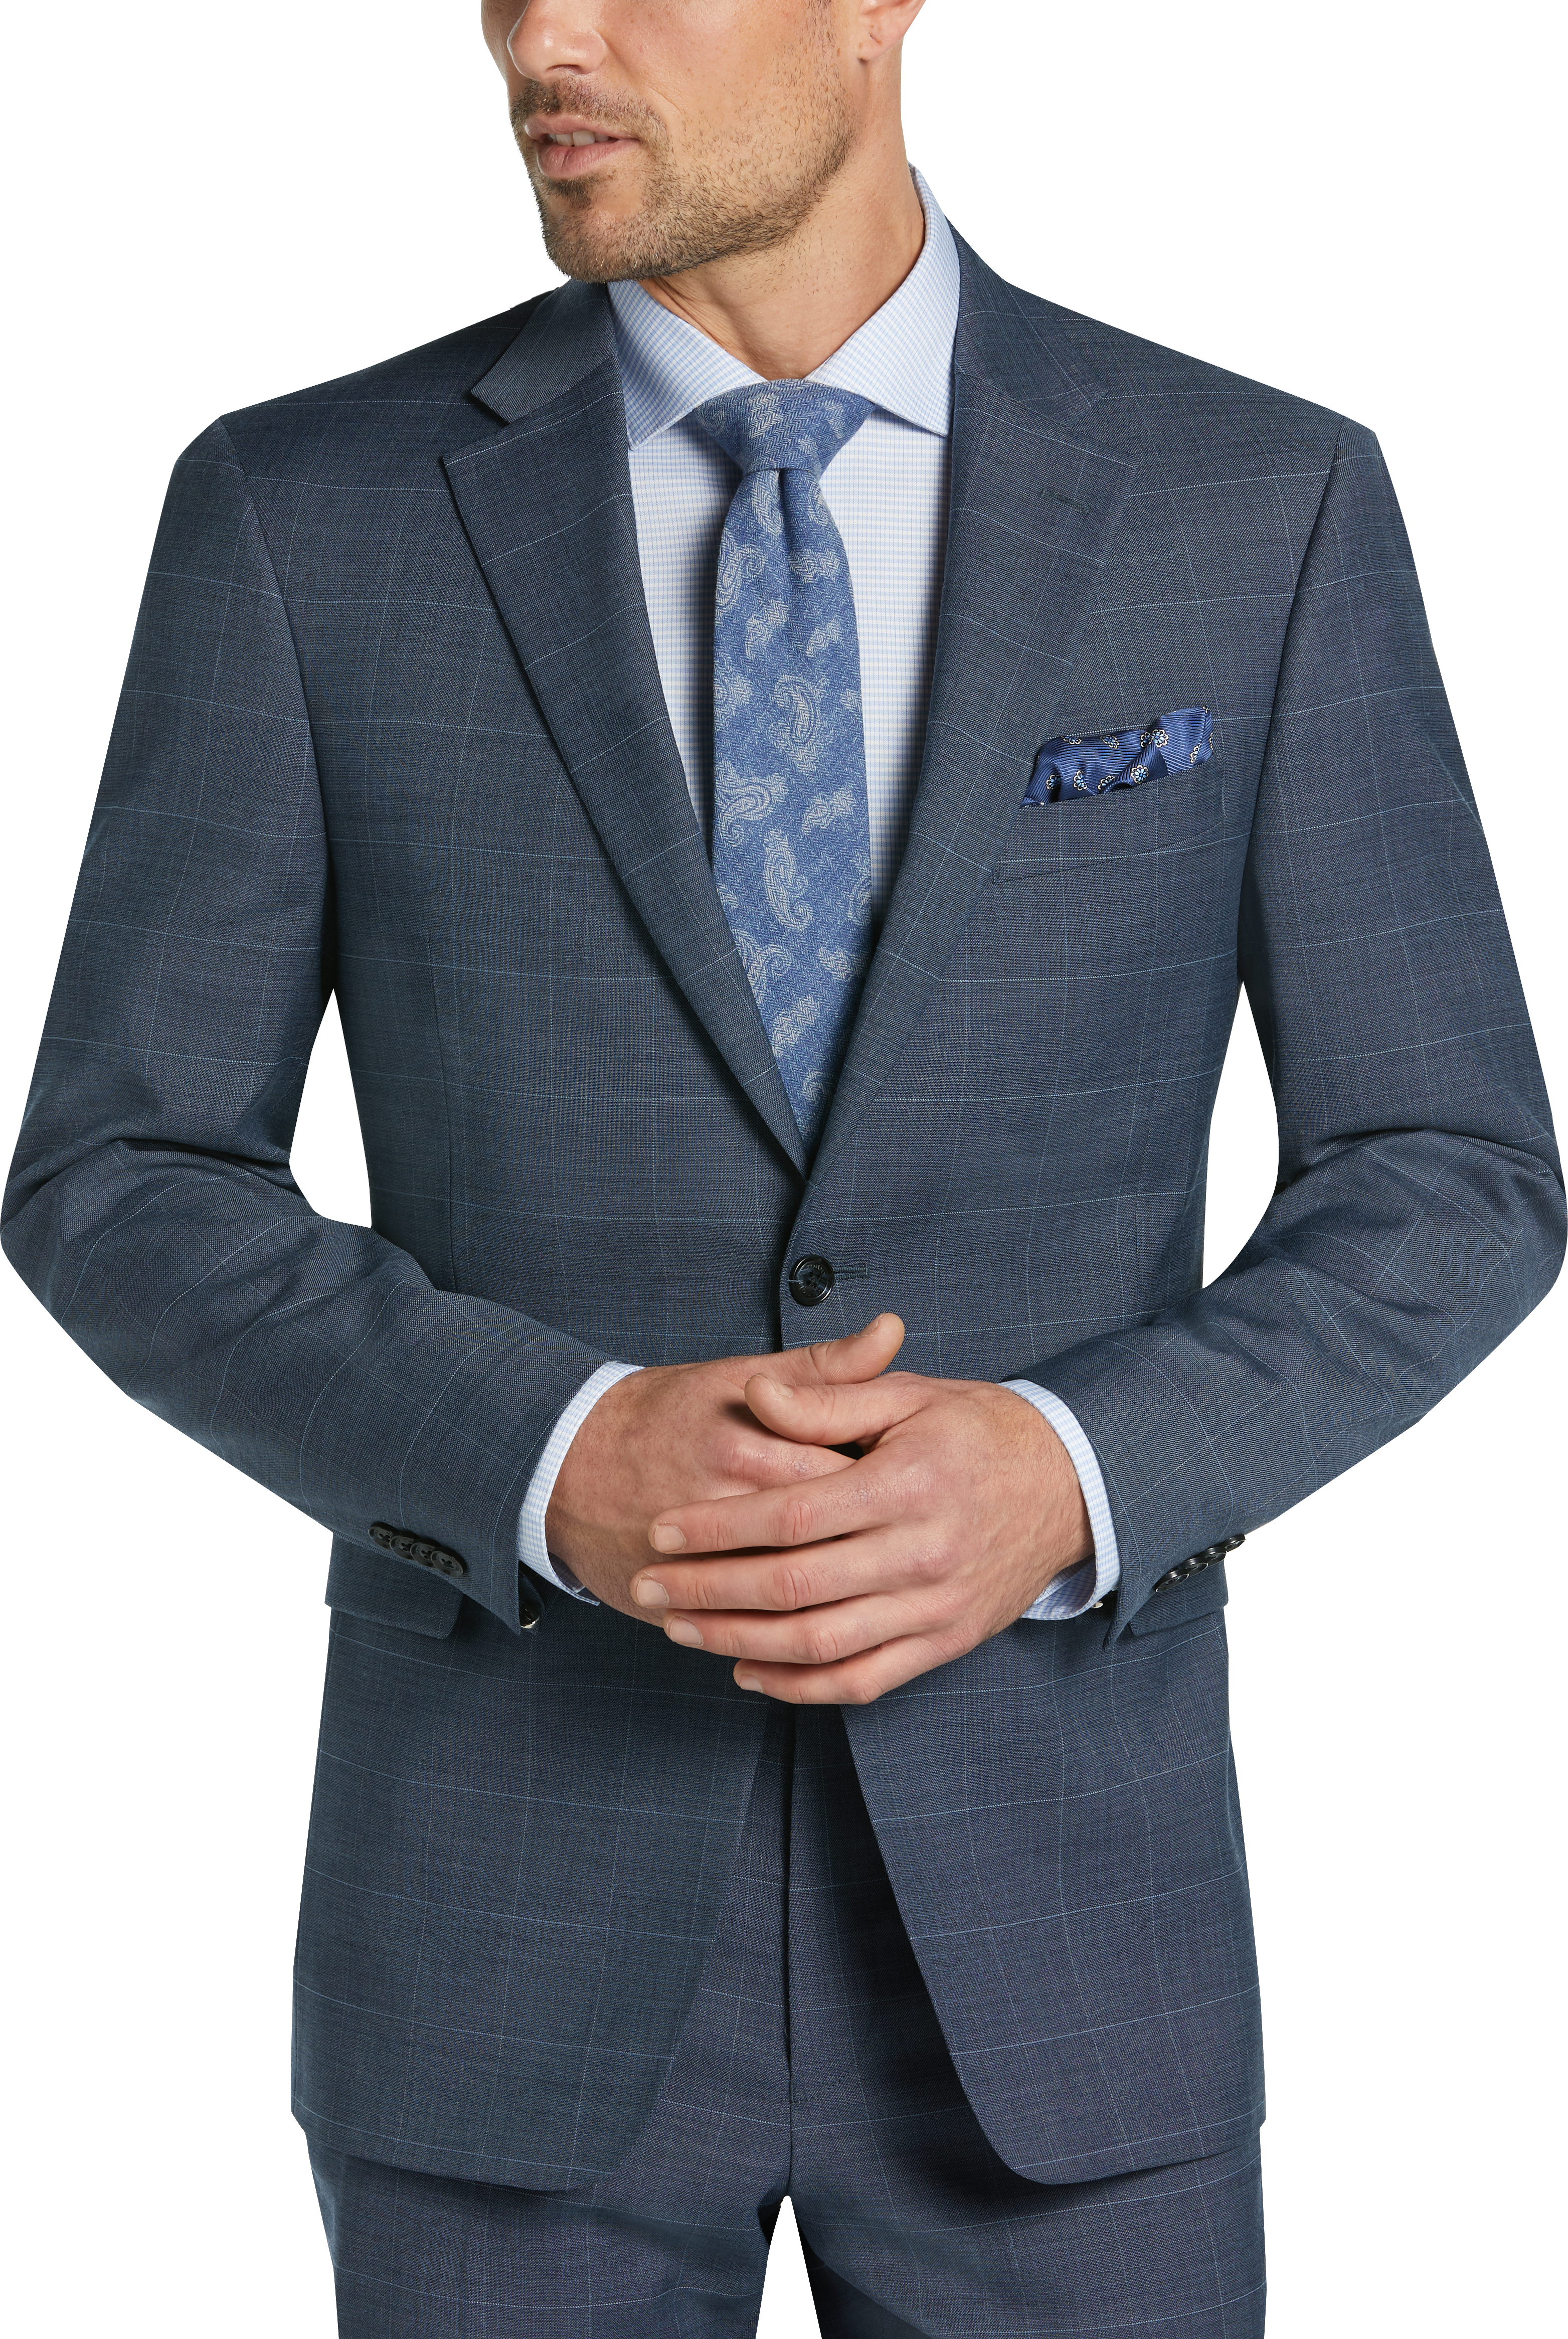 Tommy Hilfiger Blue Windowpane Slim Fit Suit - Men's Sale | Men's Wearhouse